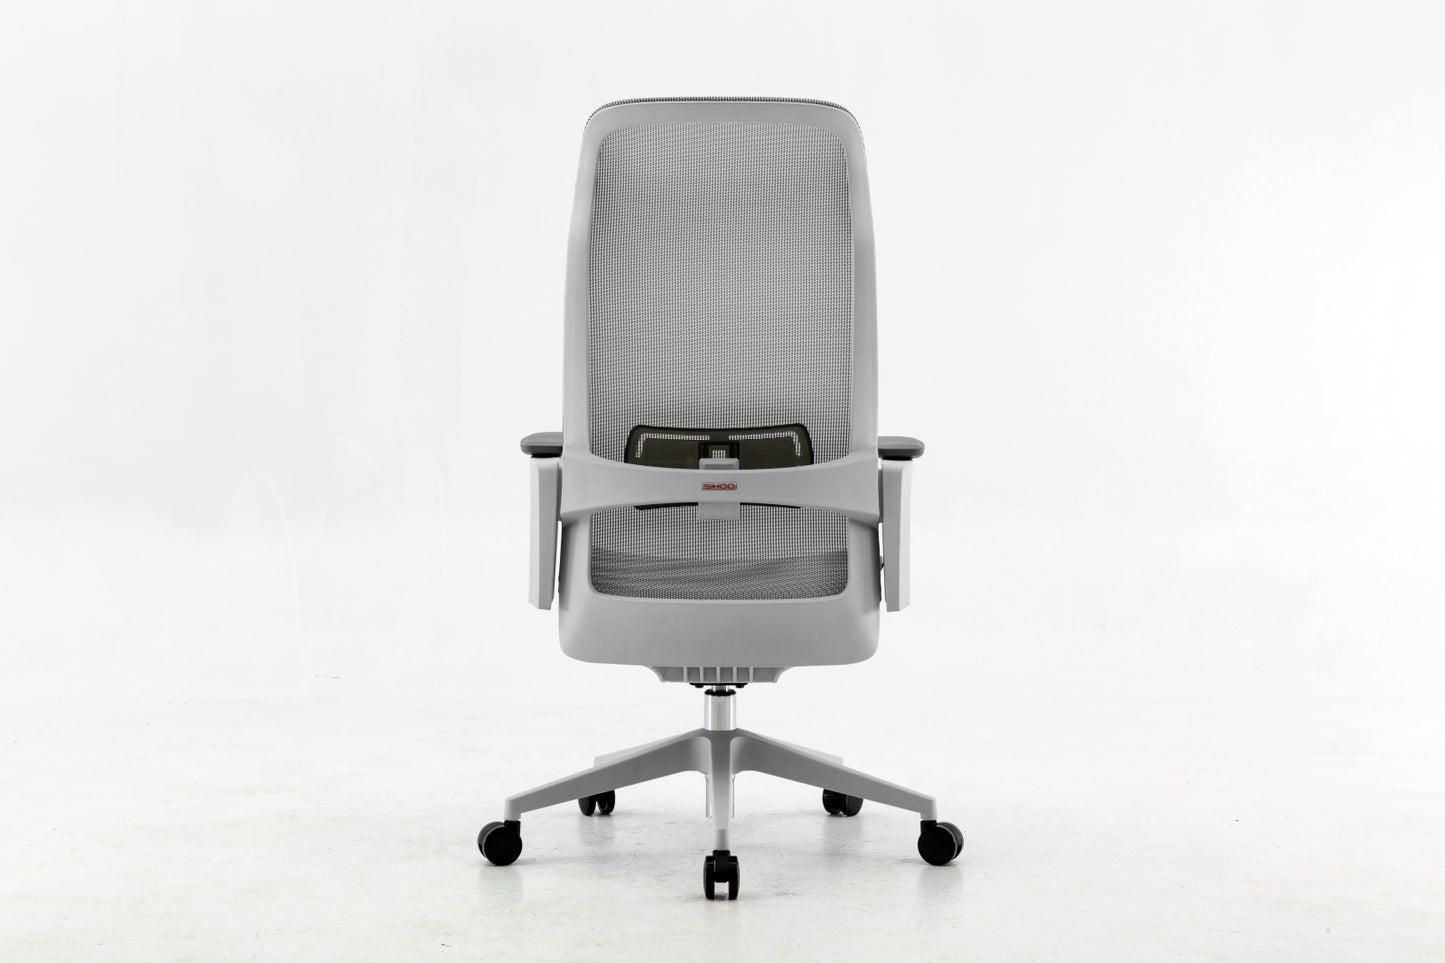 Sihoo M98C Ergonomic Chair